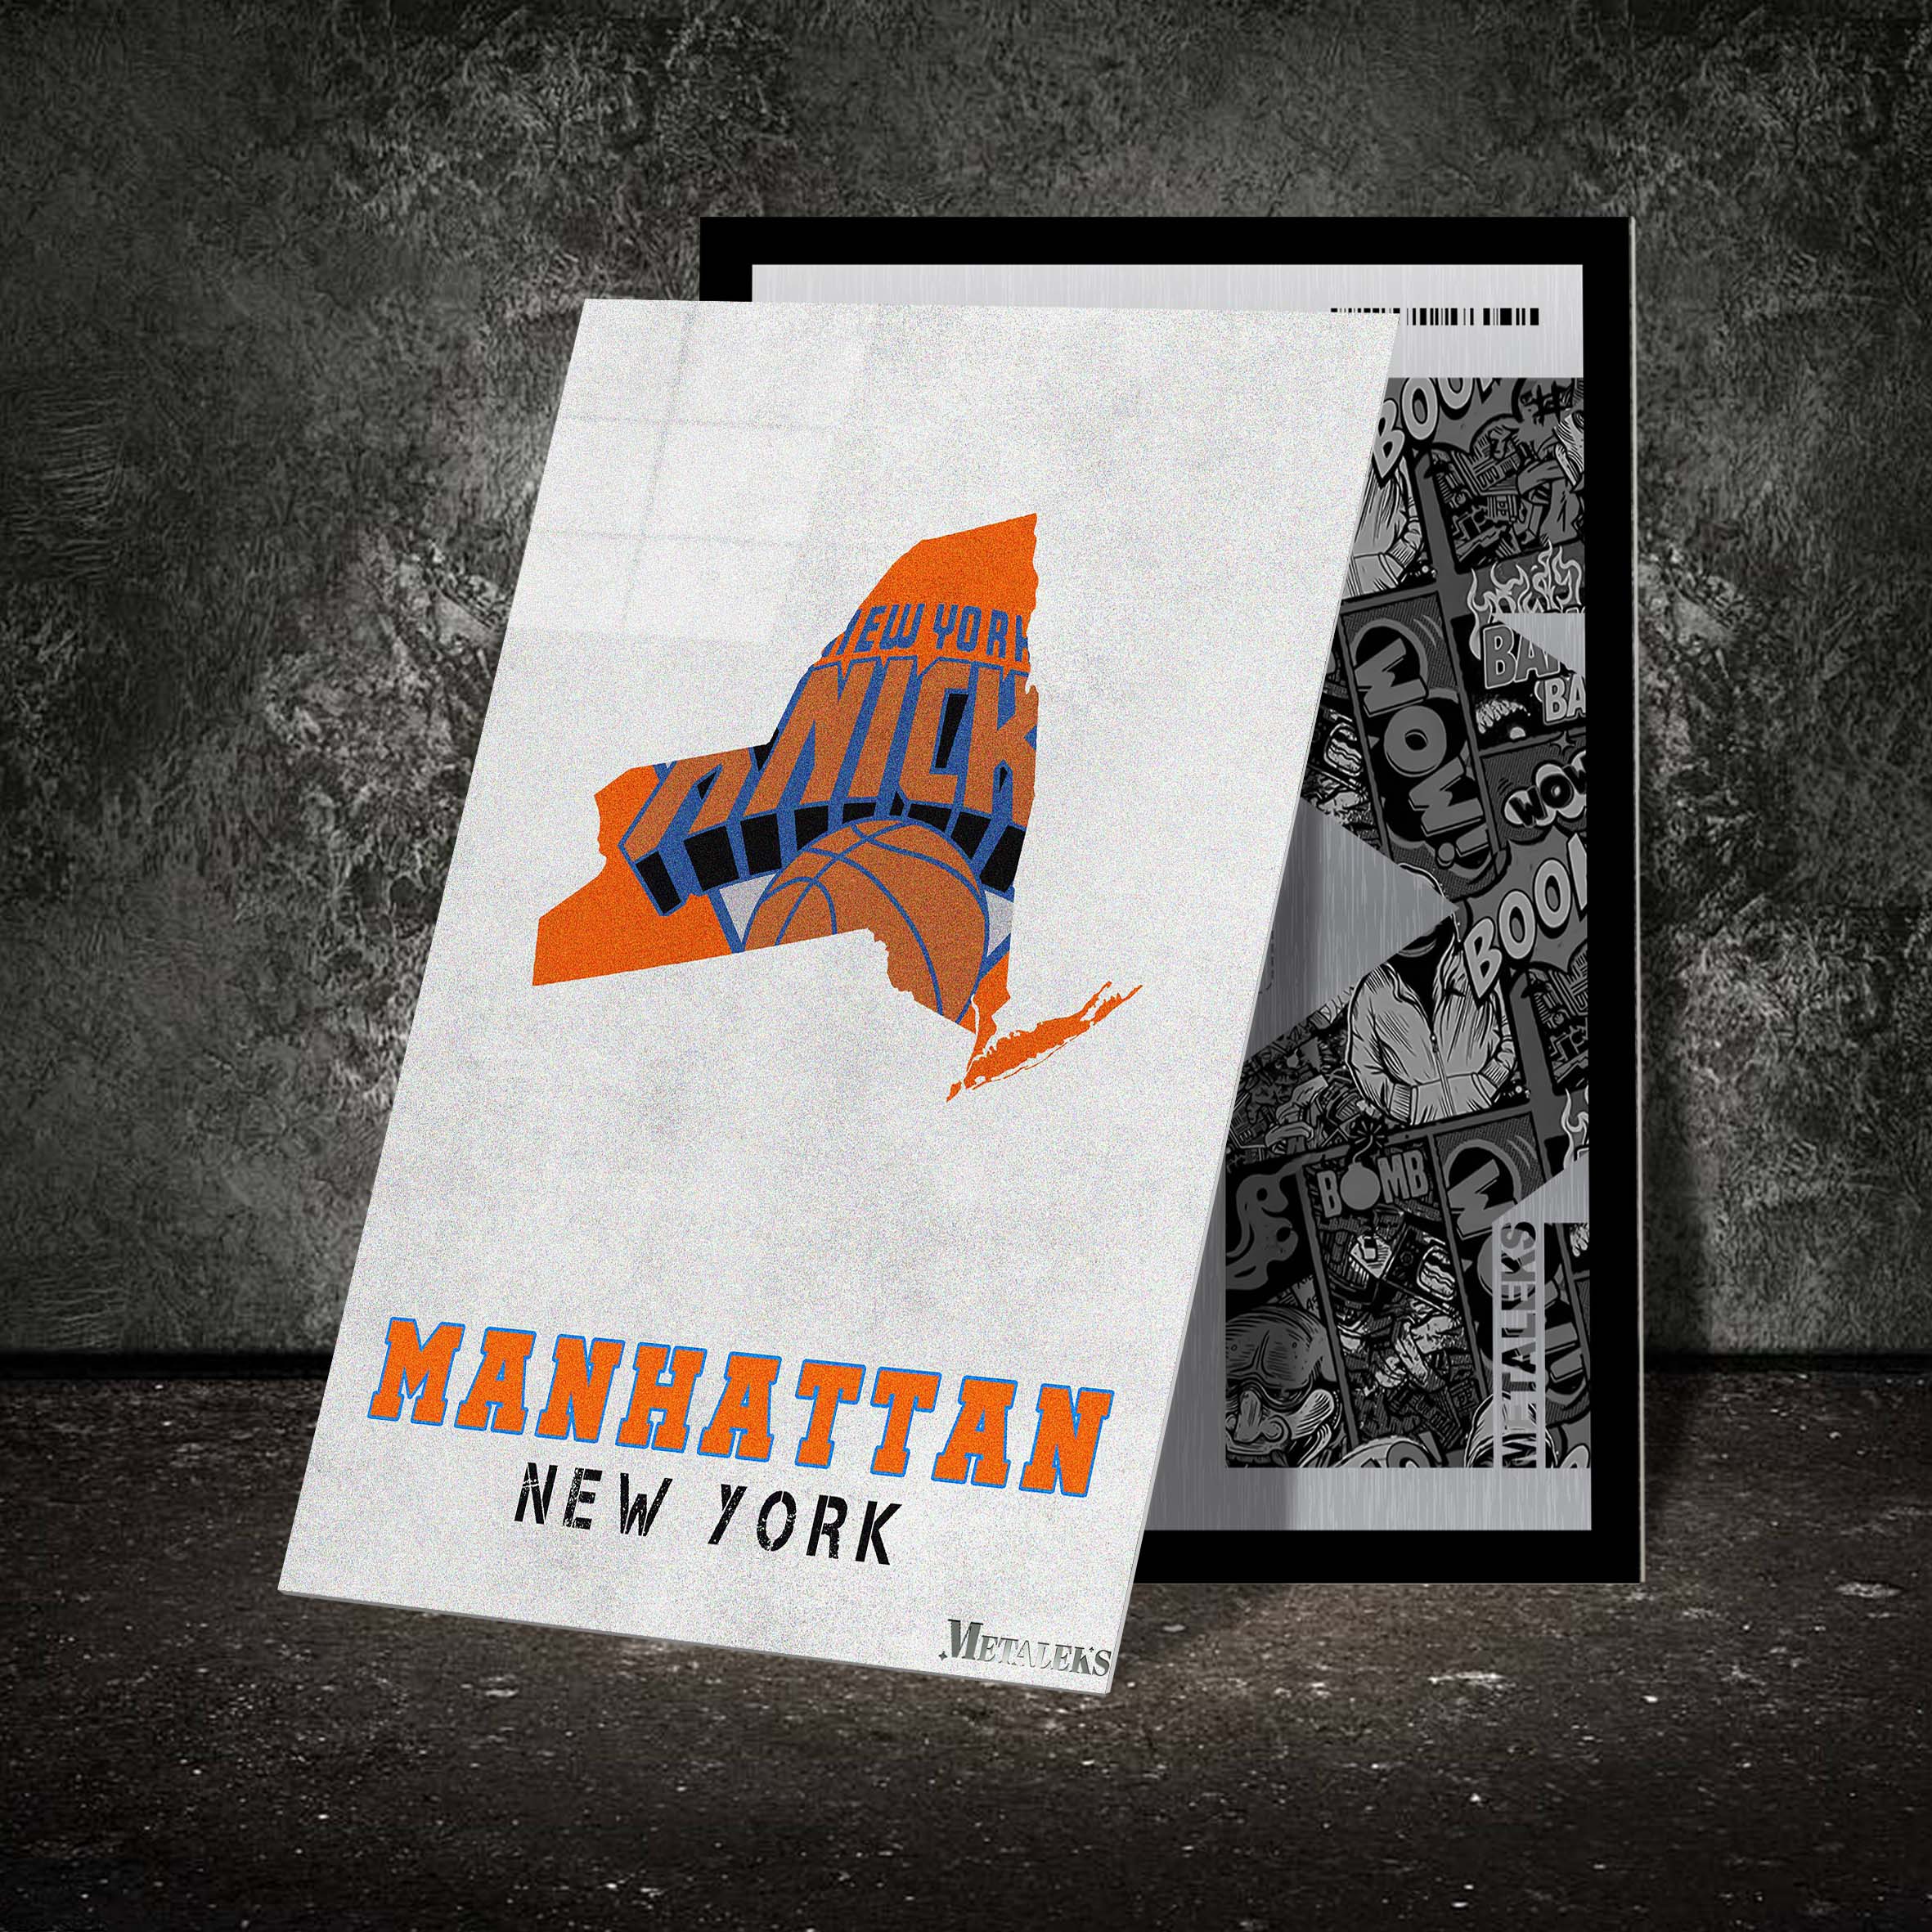 New York Knicks-designed by @Hoang Van Thuan